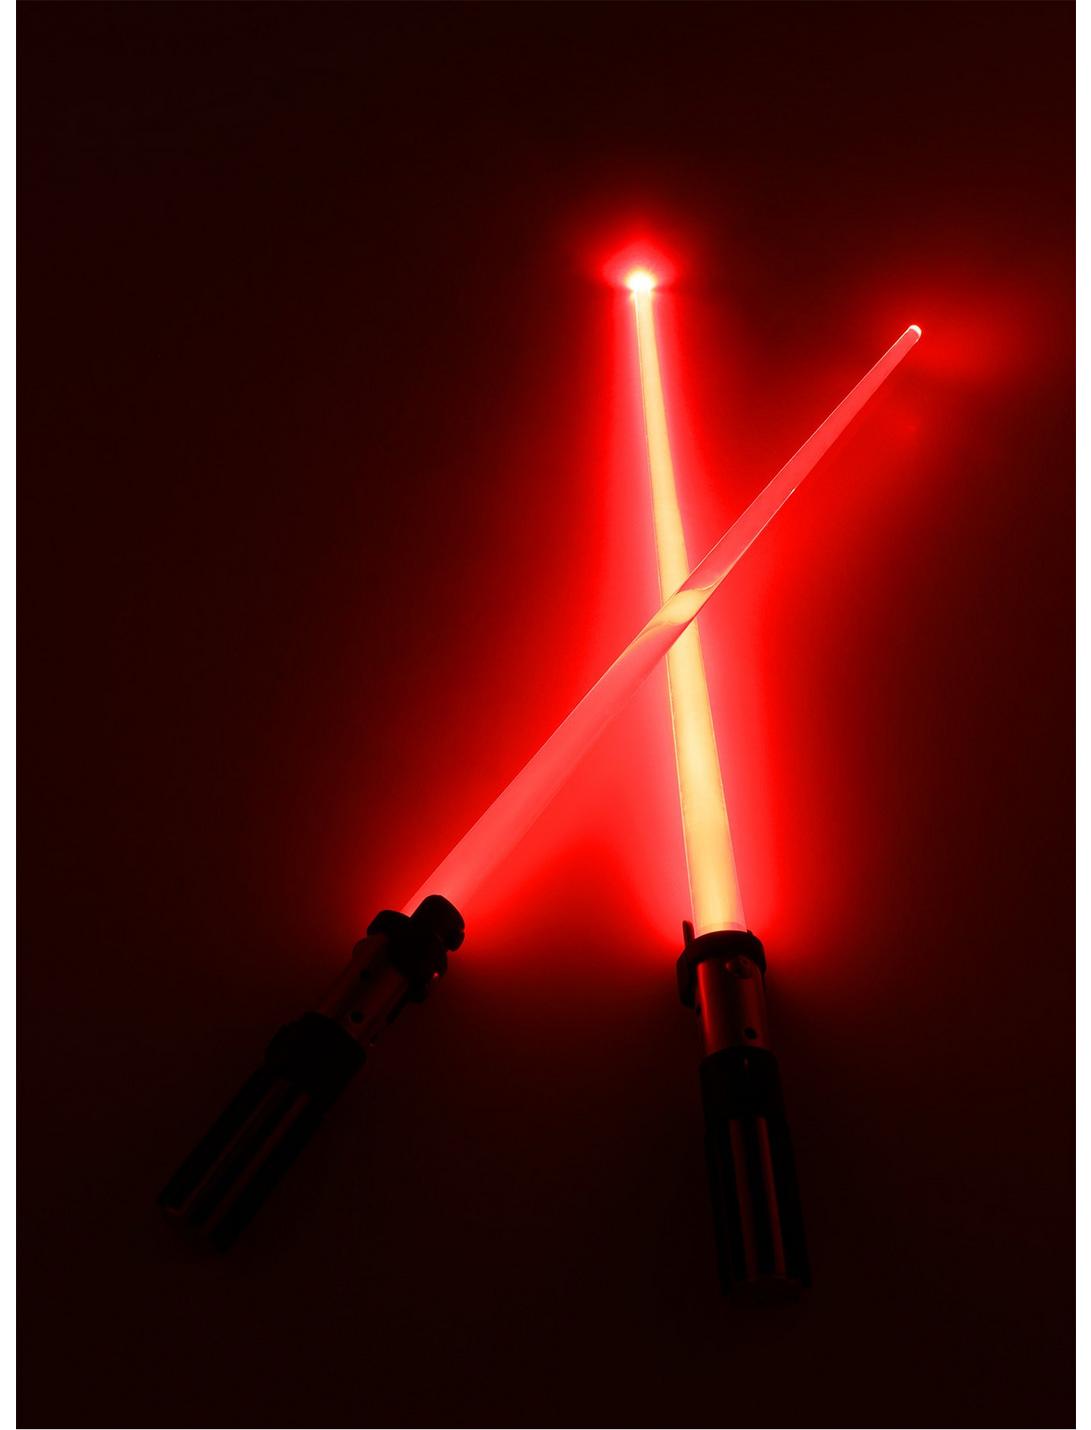 Star Wars Darth Vader Lightsaber Light-Up Chopsticks, , hi-res